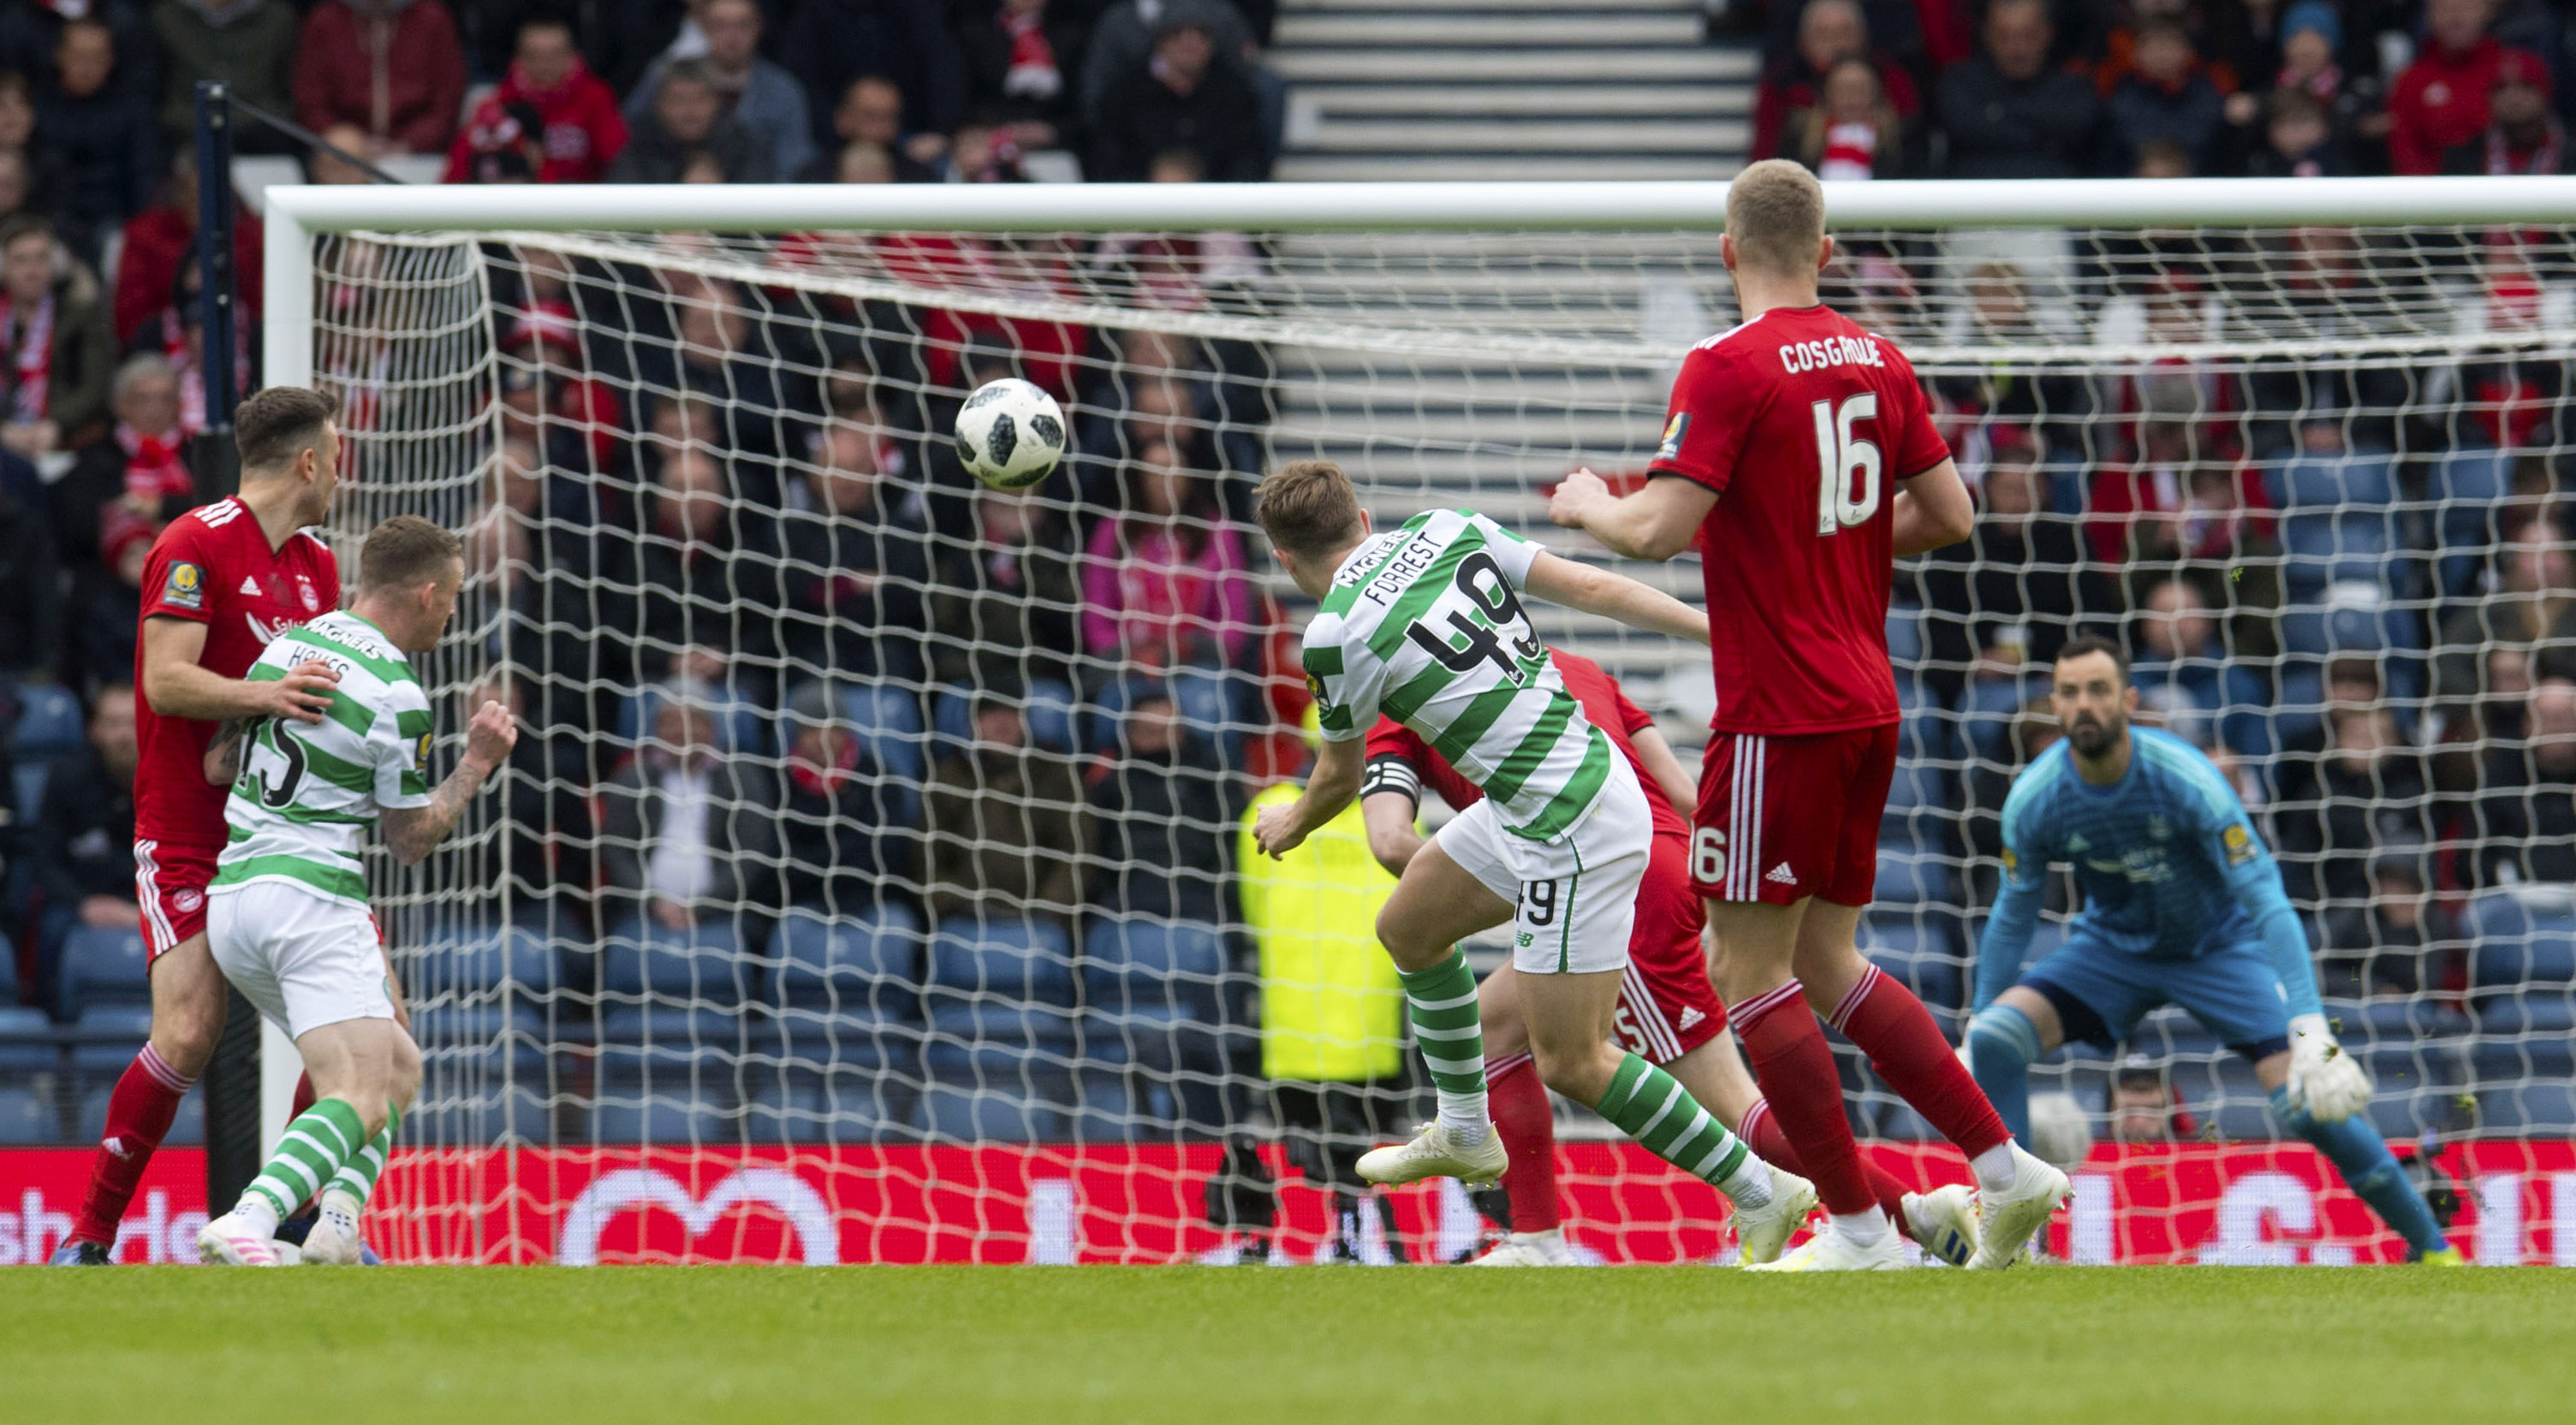 Celtic's James Forrest curls past Aberdeen goalkeeper Joe Lewis  to make it 1-0